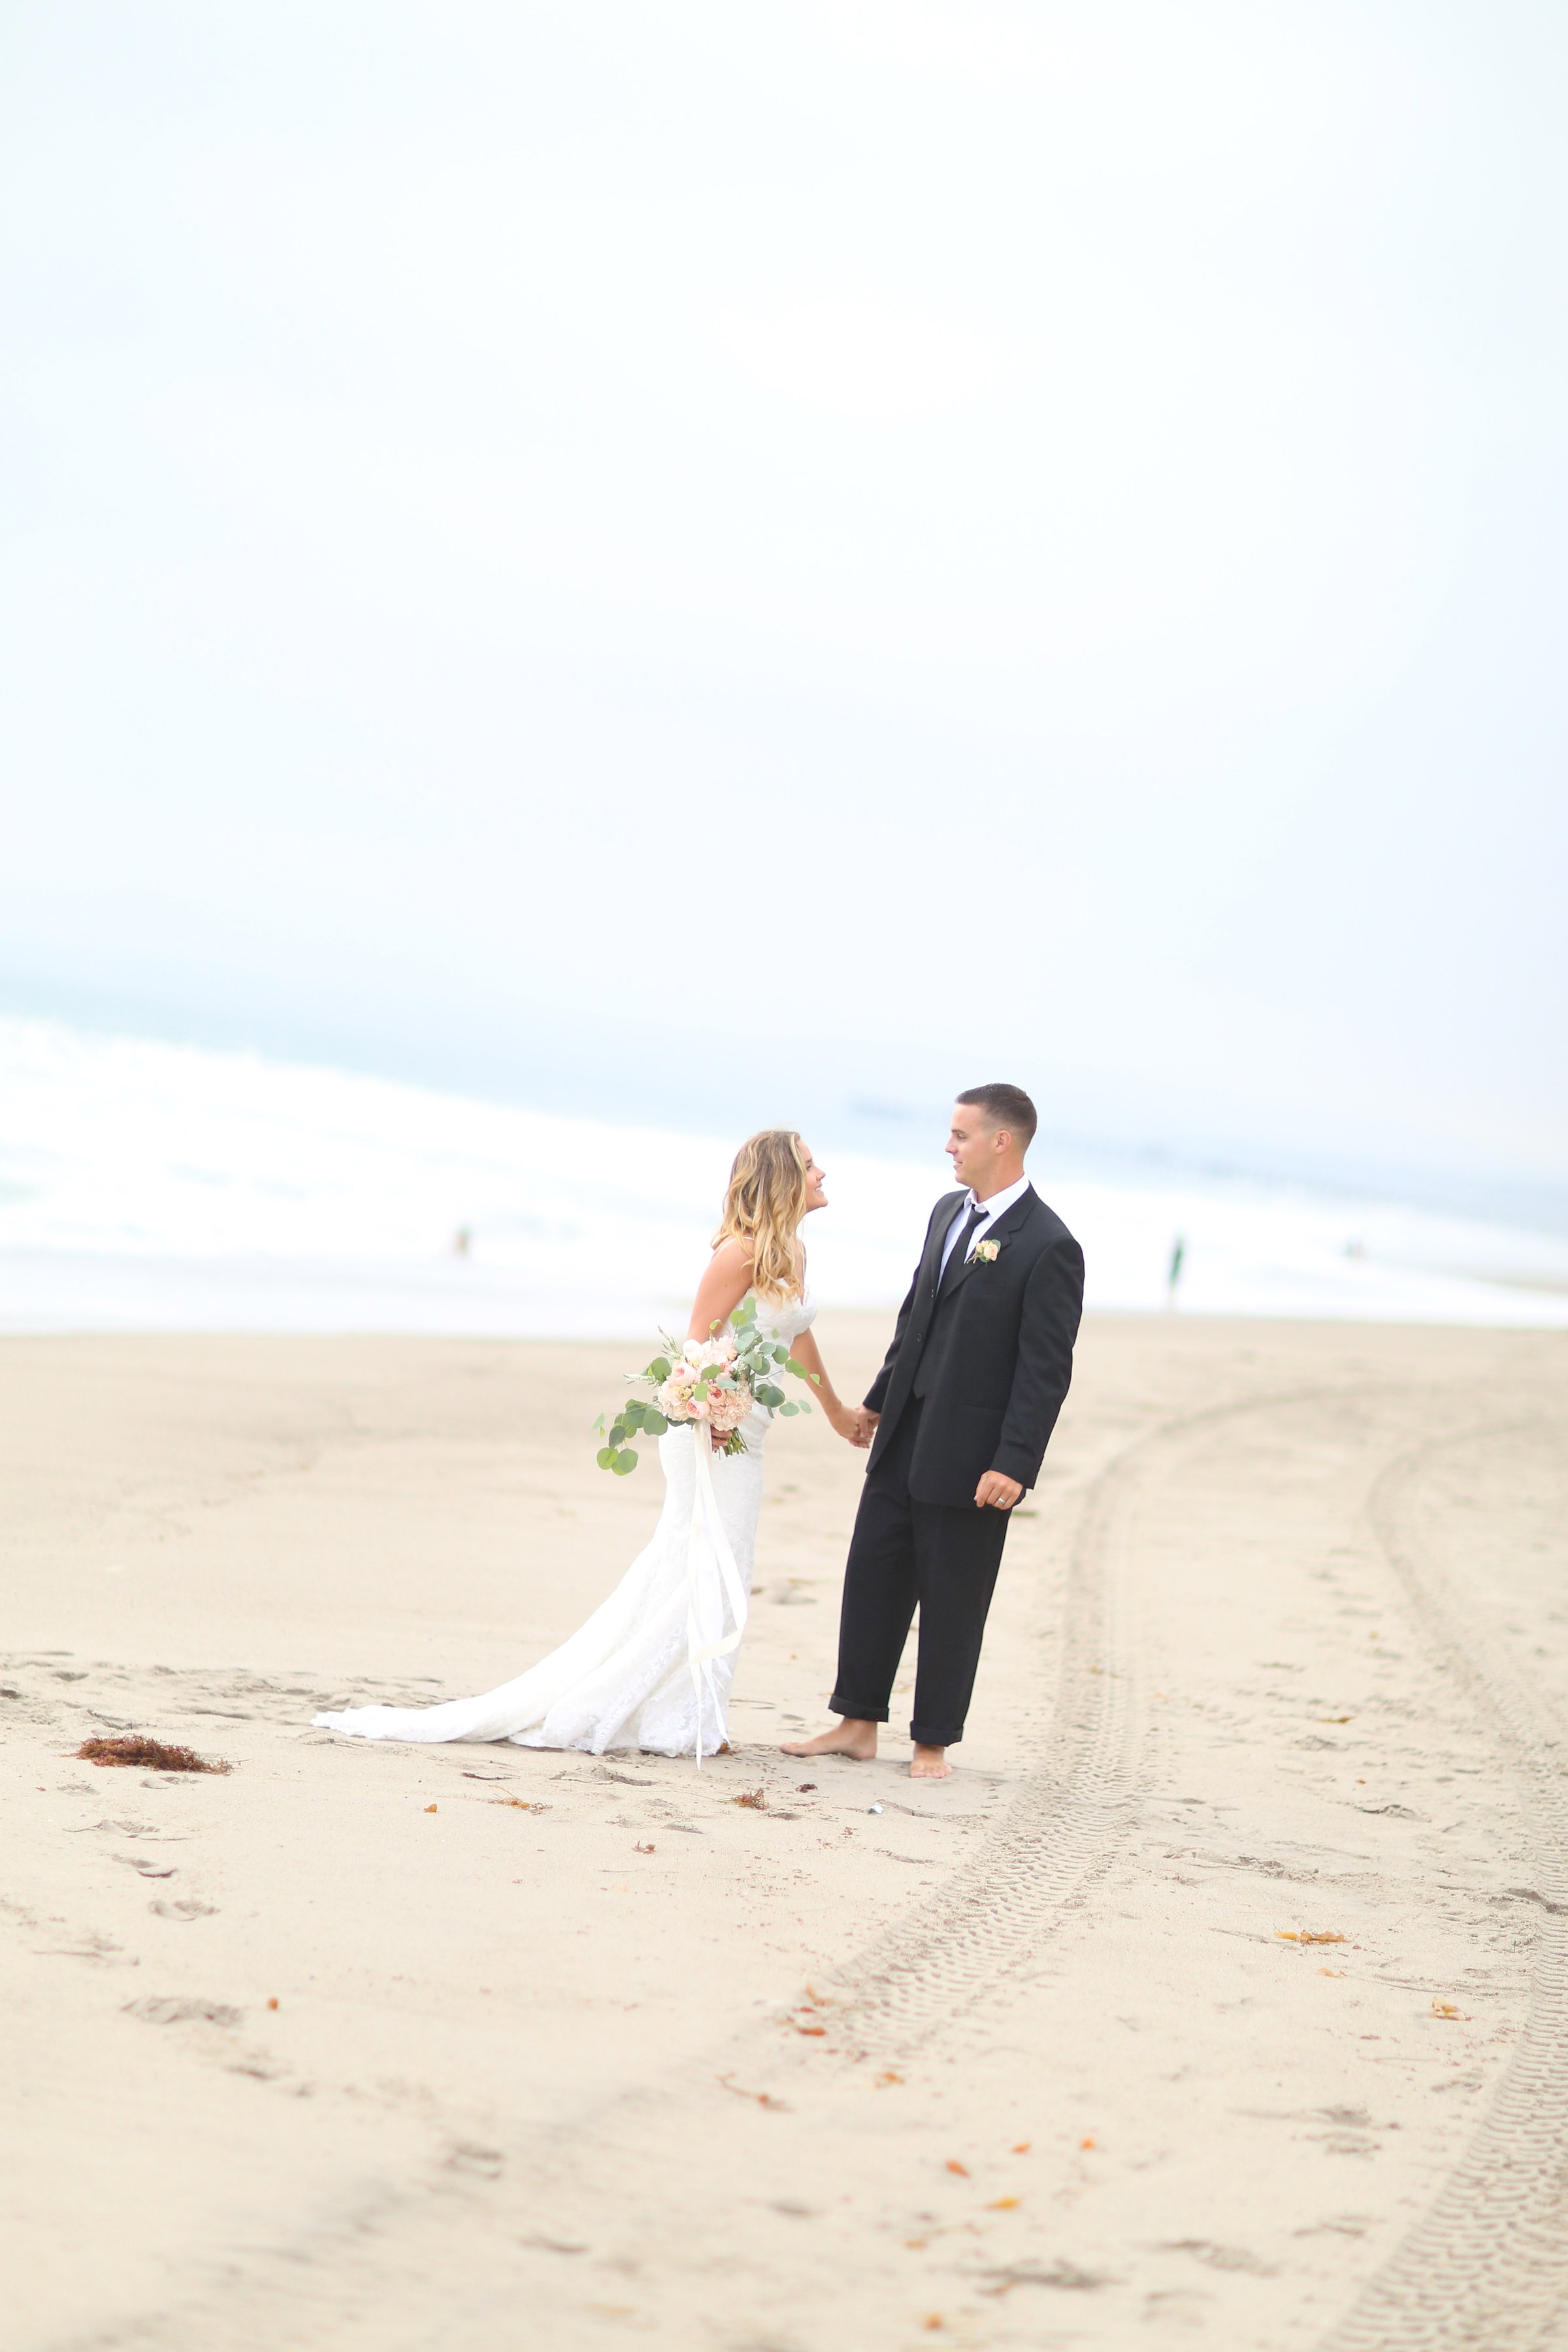 A Post Orange County Beach Wedding Portrait Session By